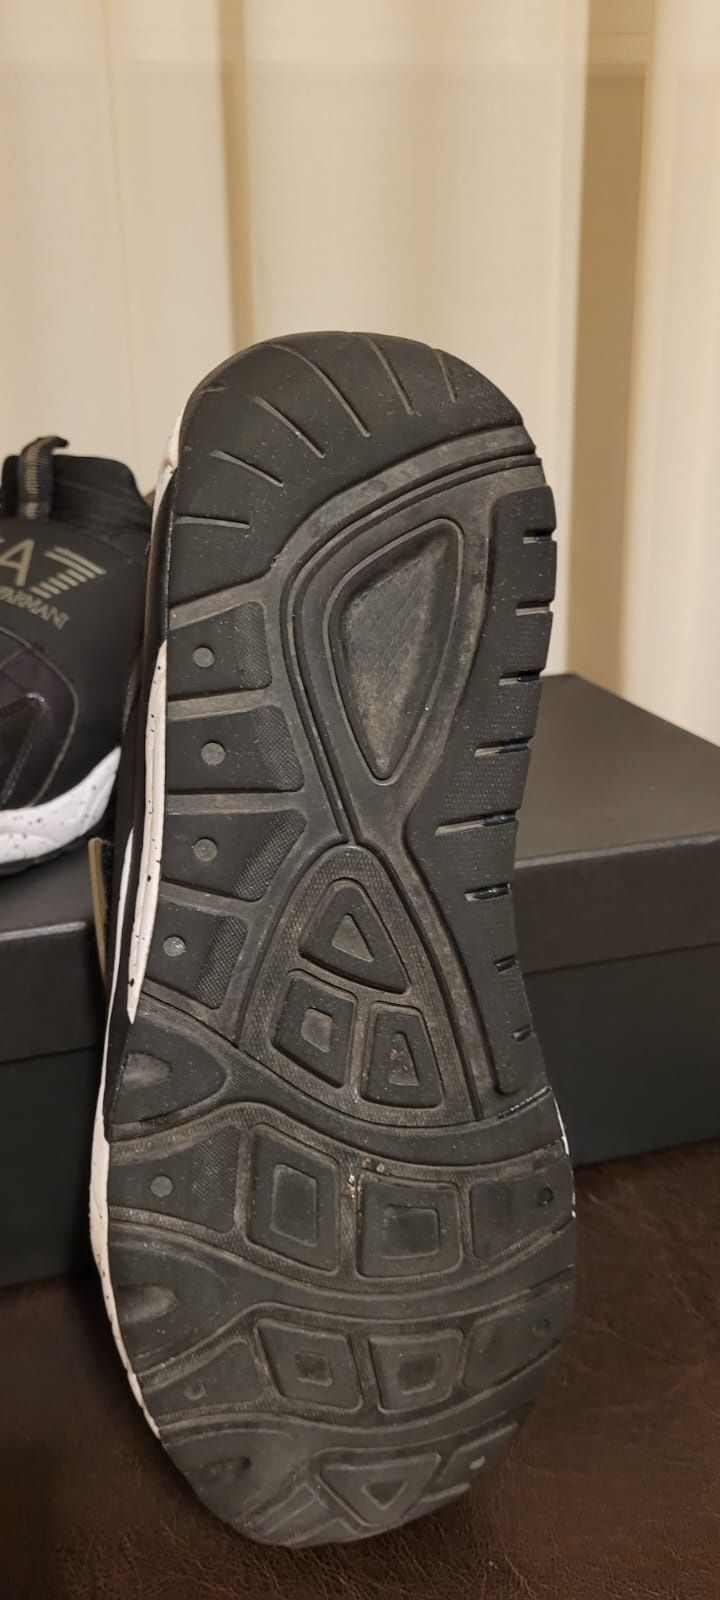 Pantofi originali Armani, Versace, DCF 42-43